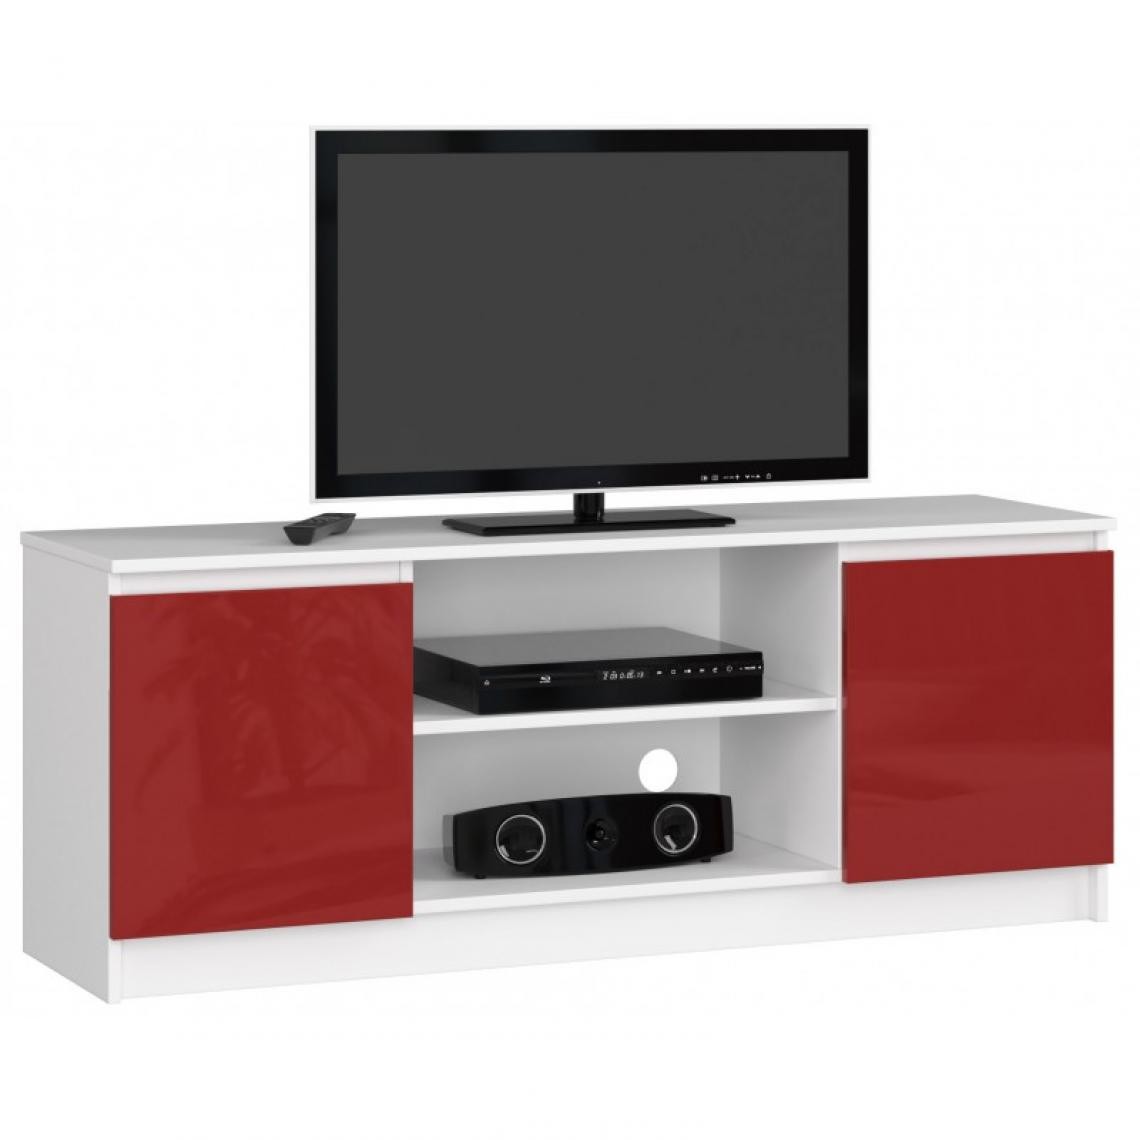 Hucoco - DUSK - Meuble TV style moderne salon - 140x55x40 - 2 portes+2 tablettes - Multimédia - Rouge - Meubles TV, Hi-Fi